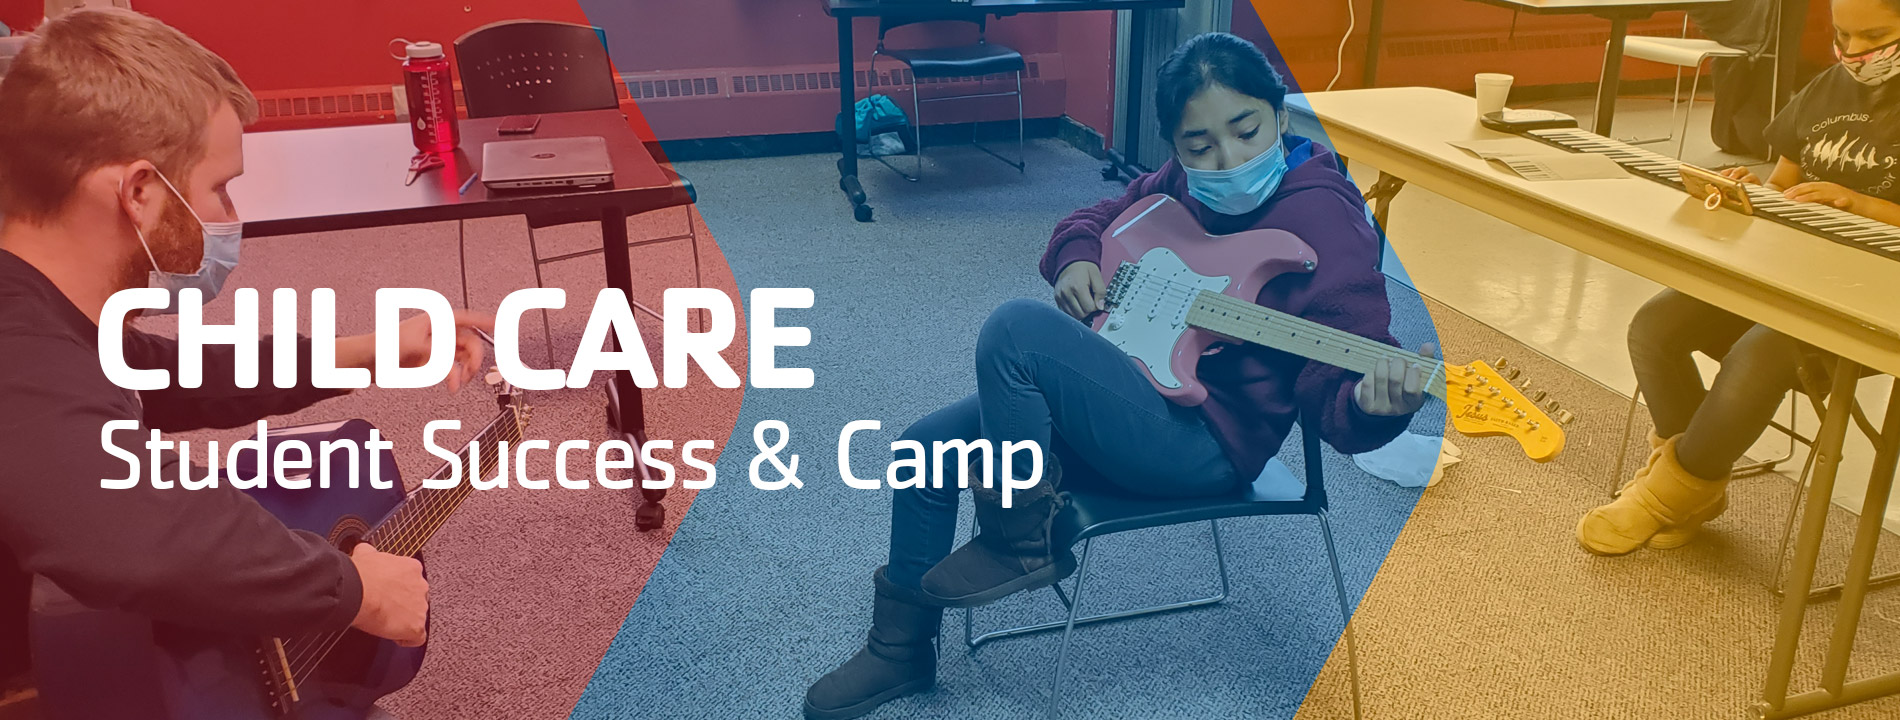 Child Care, Student Success & Camp